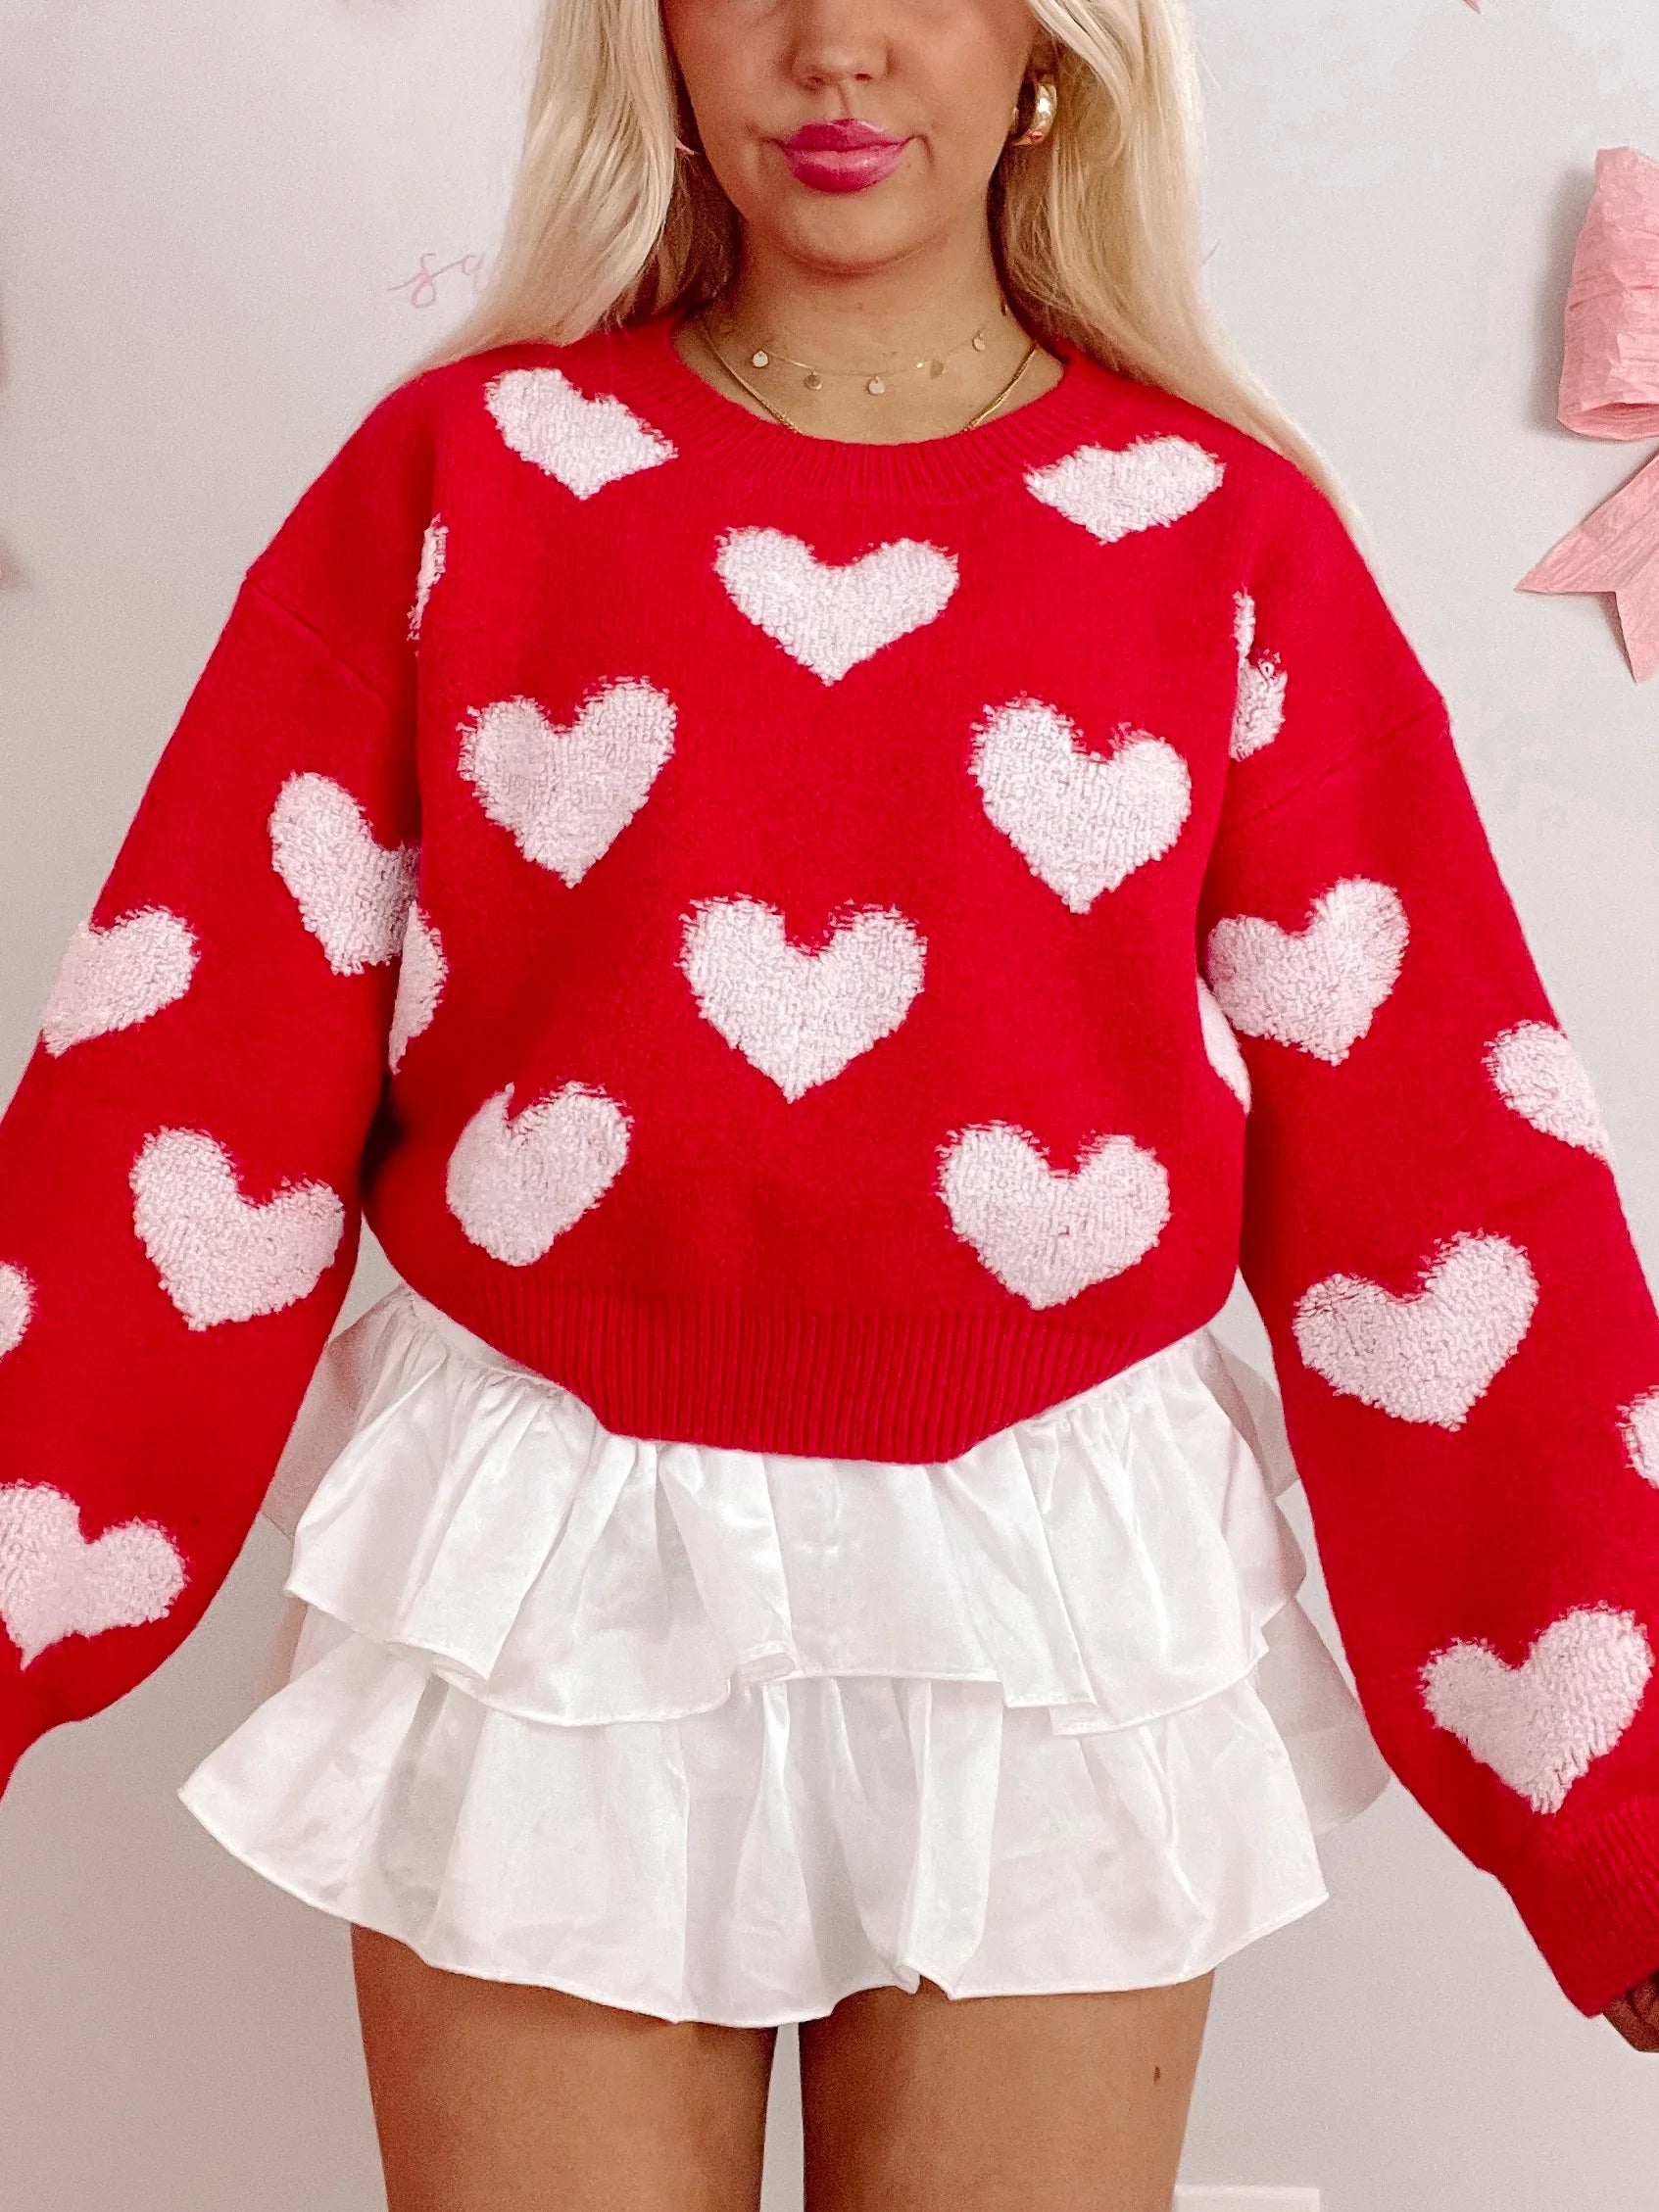 Heartfelt Red Heart Sweater | sassyshortcake.com | Sassy Shortcake